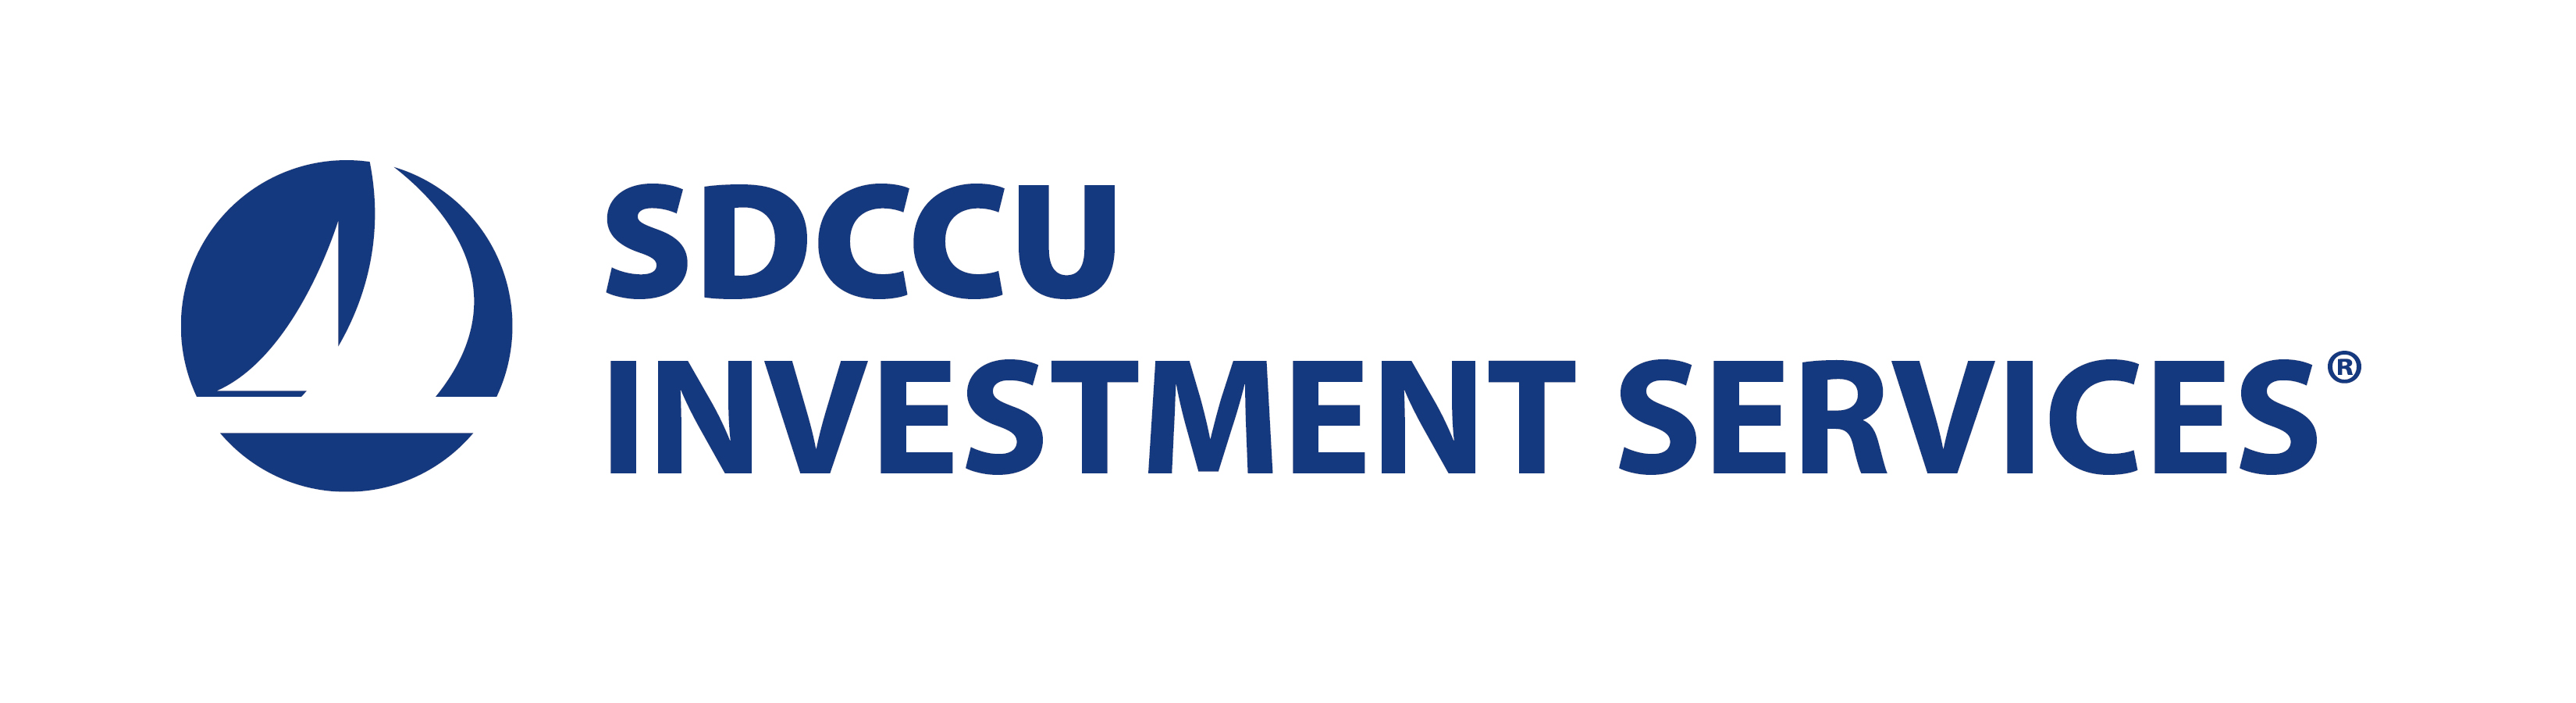 SDCCU Investment Services